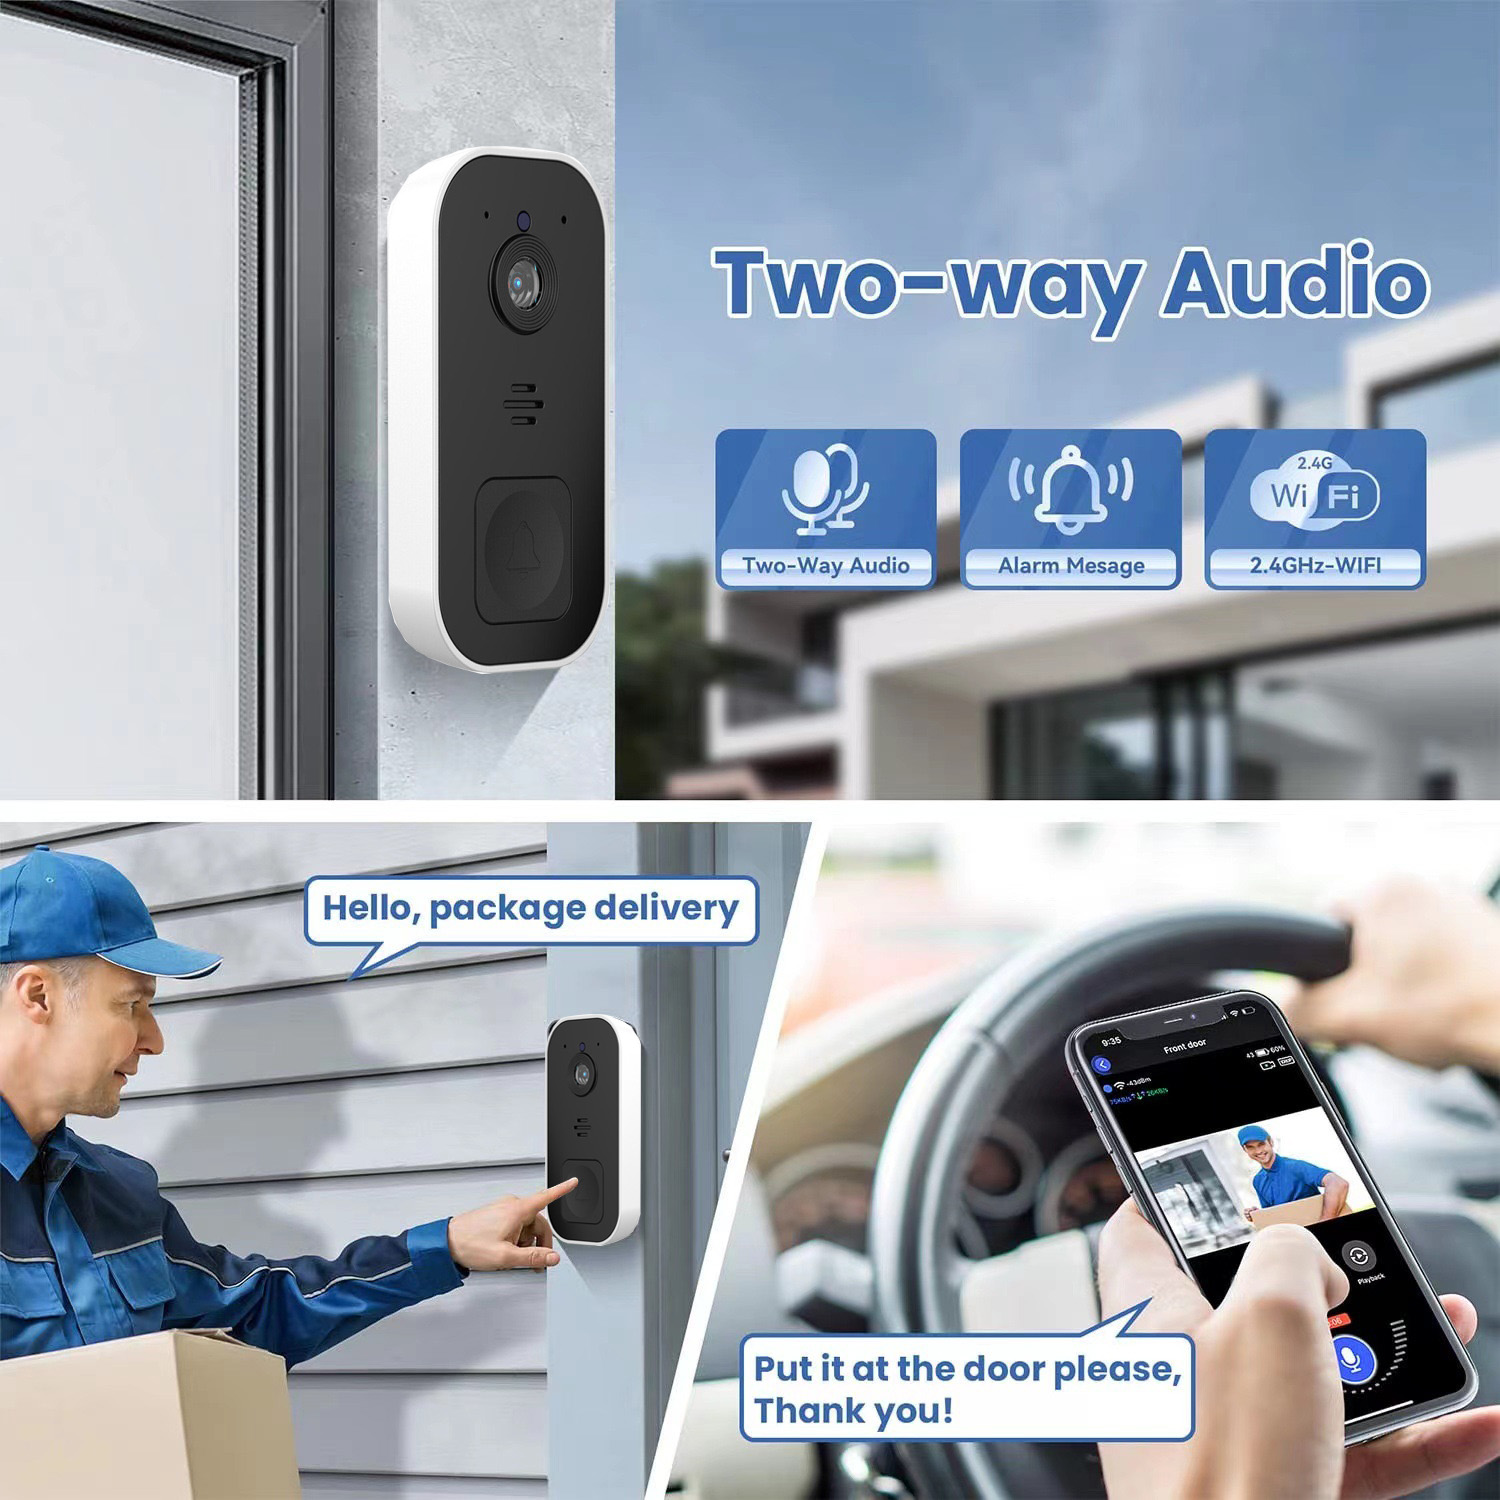 Smart-Home-Appliances-Video-Doorbell-Wireless-Doorbell-Camera1080p-HD-Video-2-way-Audio-IP65-Smart-Security-Door-Bell-with-Cloud-Storage-Night-Vision-Real-Time-Monitor-34